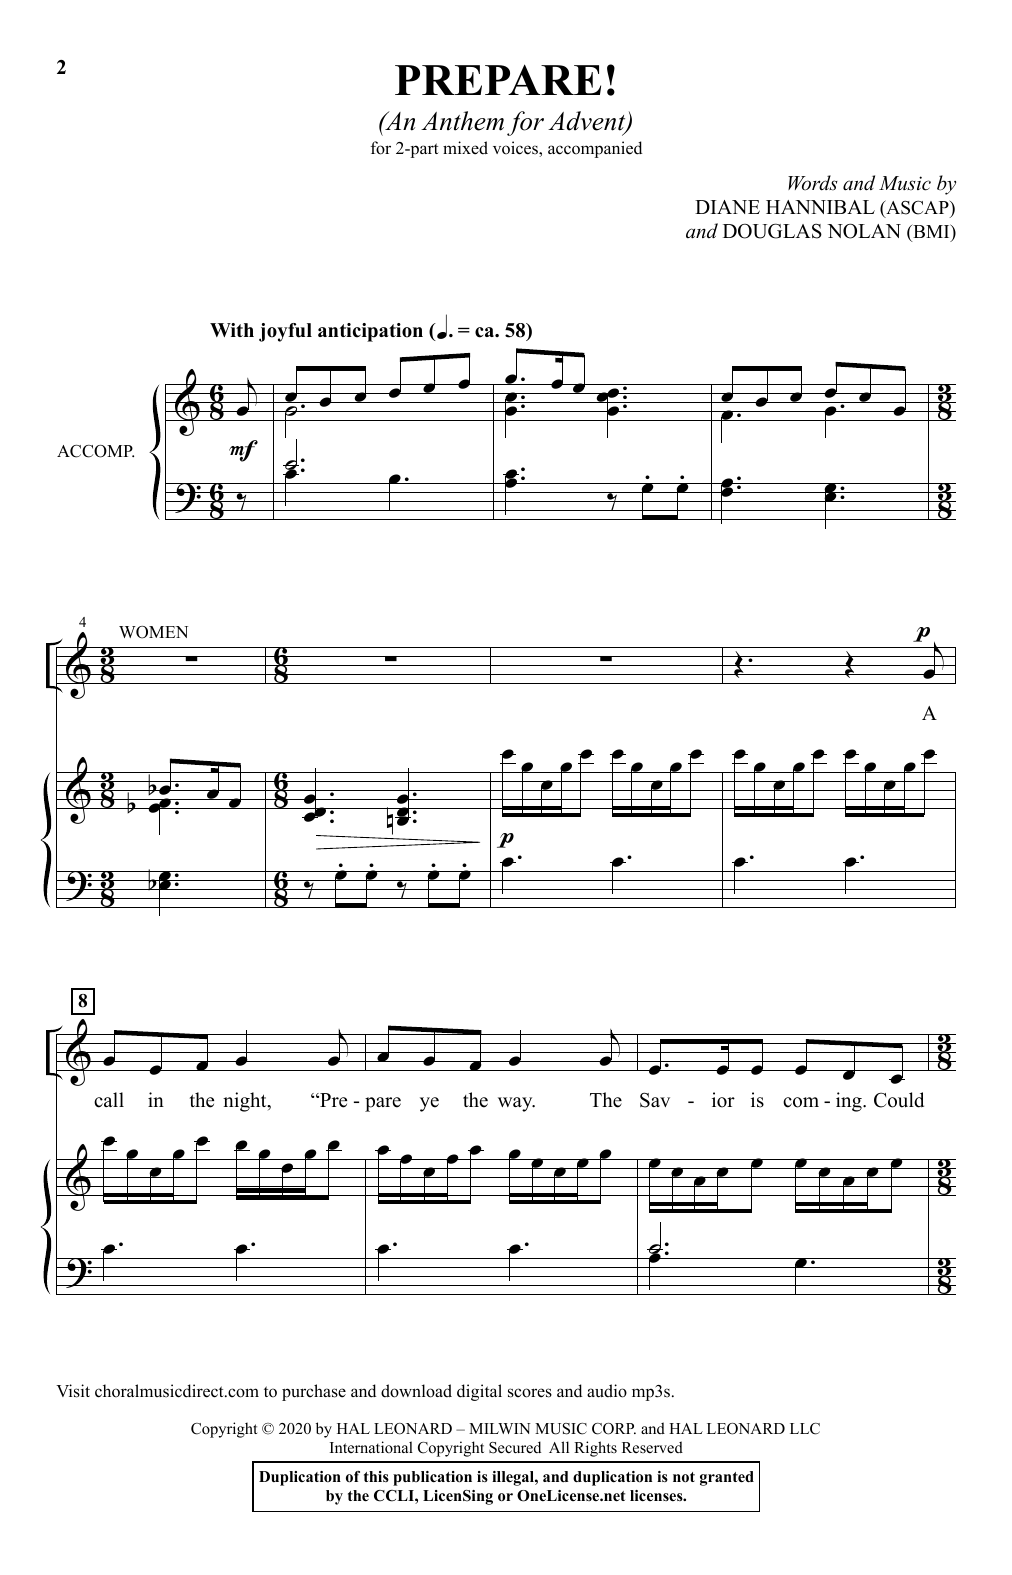 Diane Hannibal & Douglas Nolan Prepare! (An Anthem For Advent) sheet music notes and chords arranged for 2-Part Choir